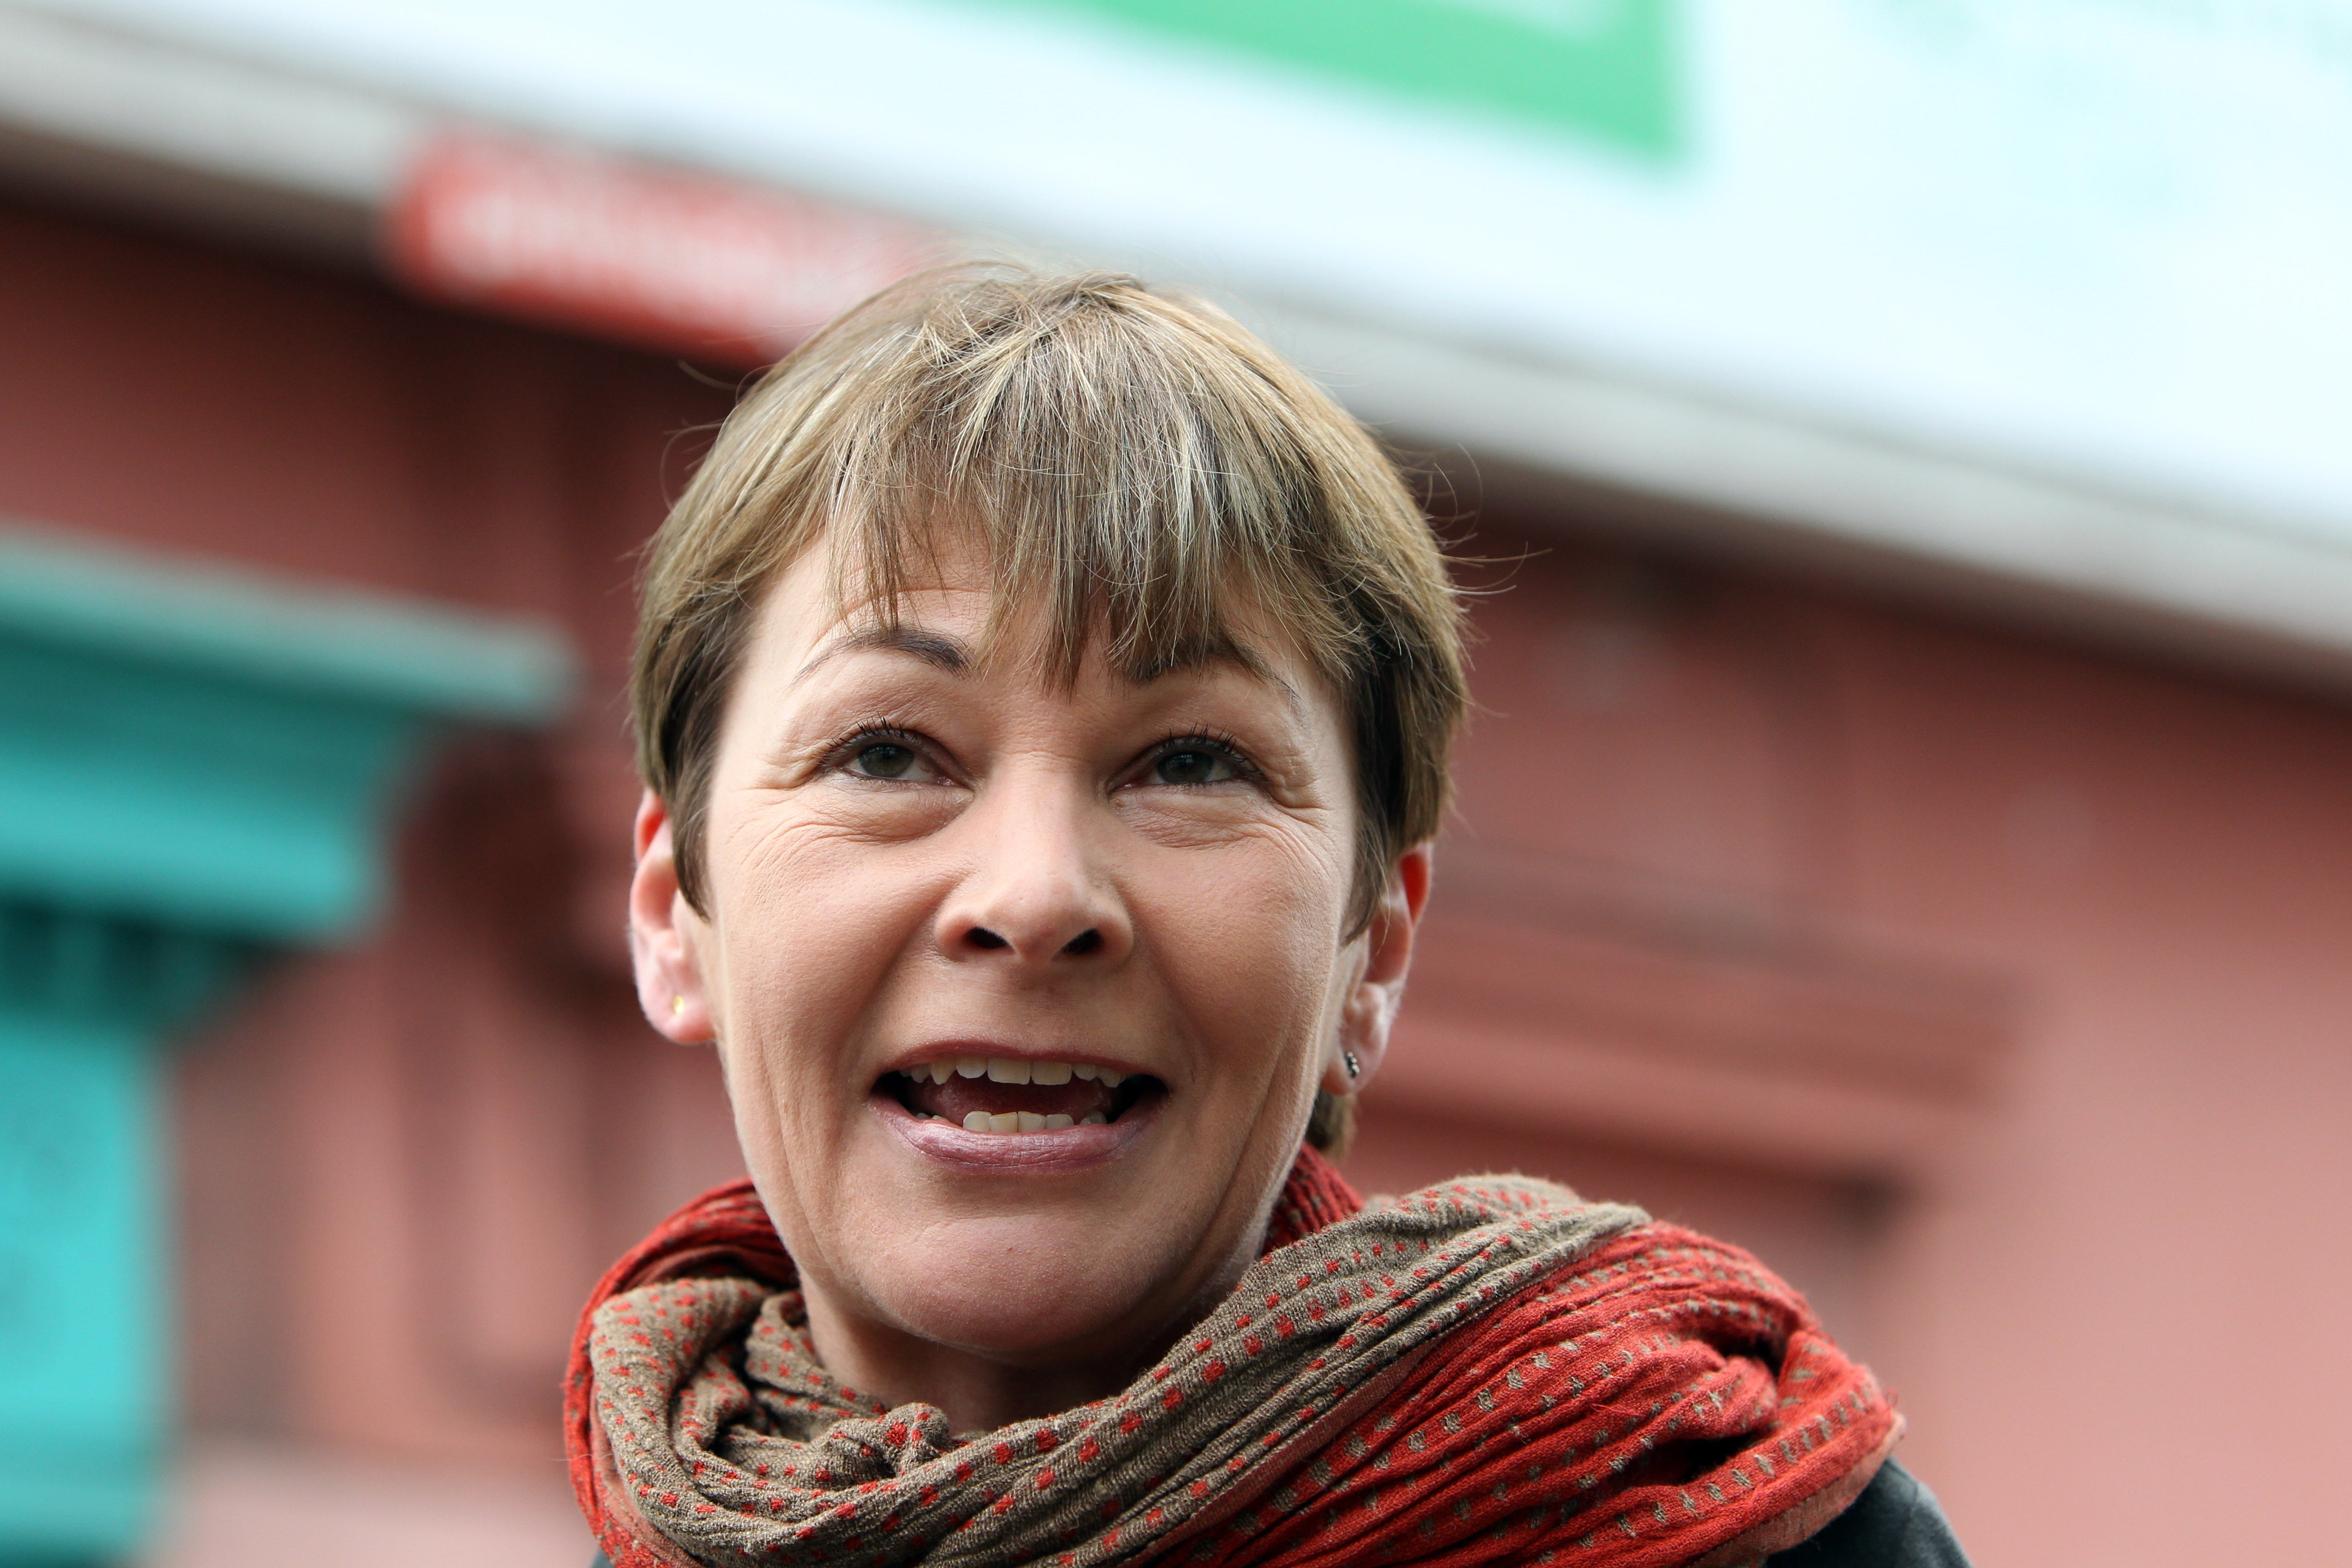 Green MP Caroline Lucas, who represents Brighton Pavilion consituency